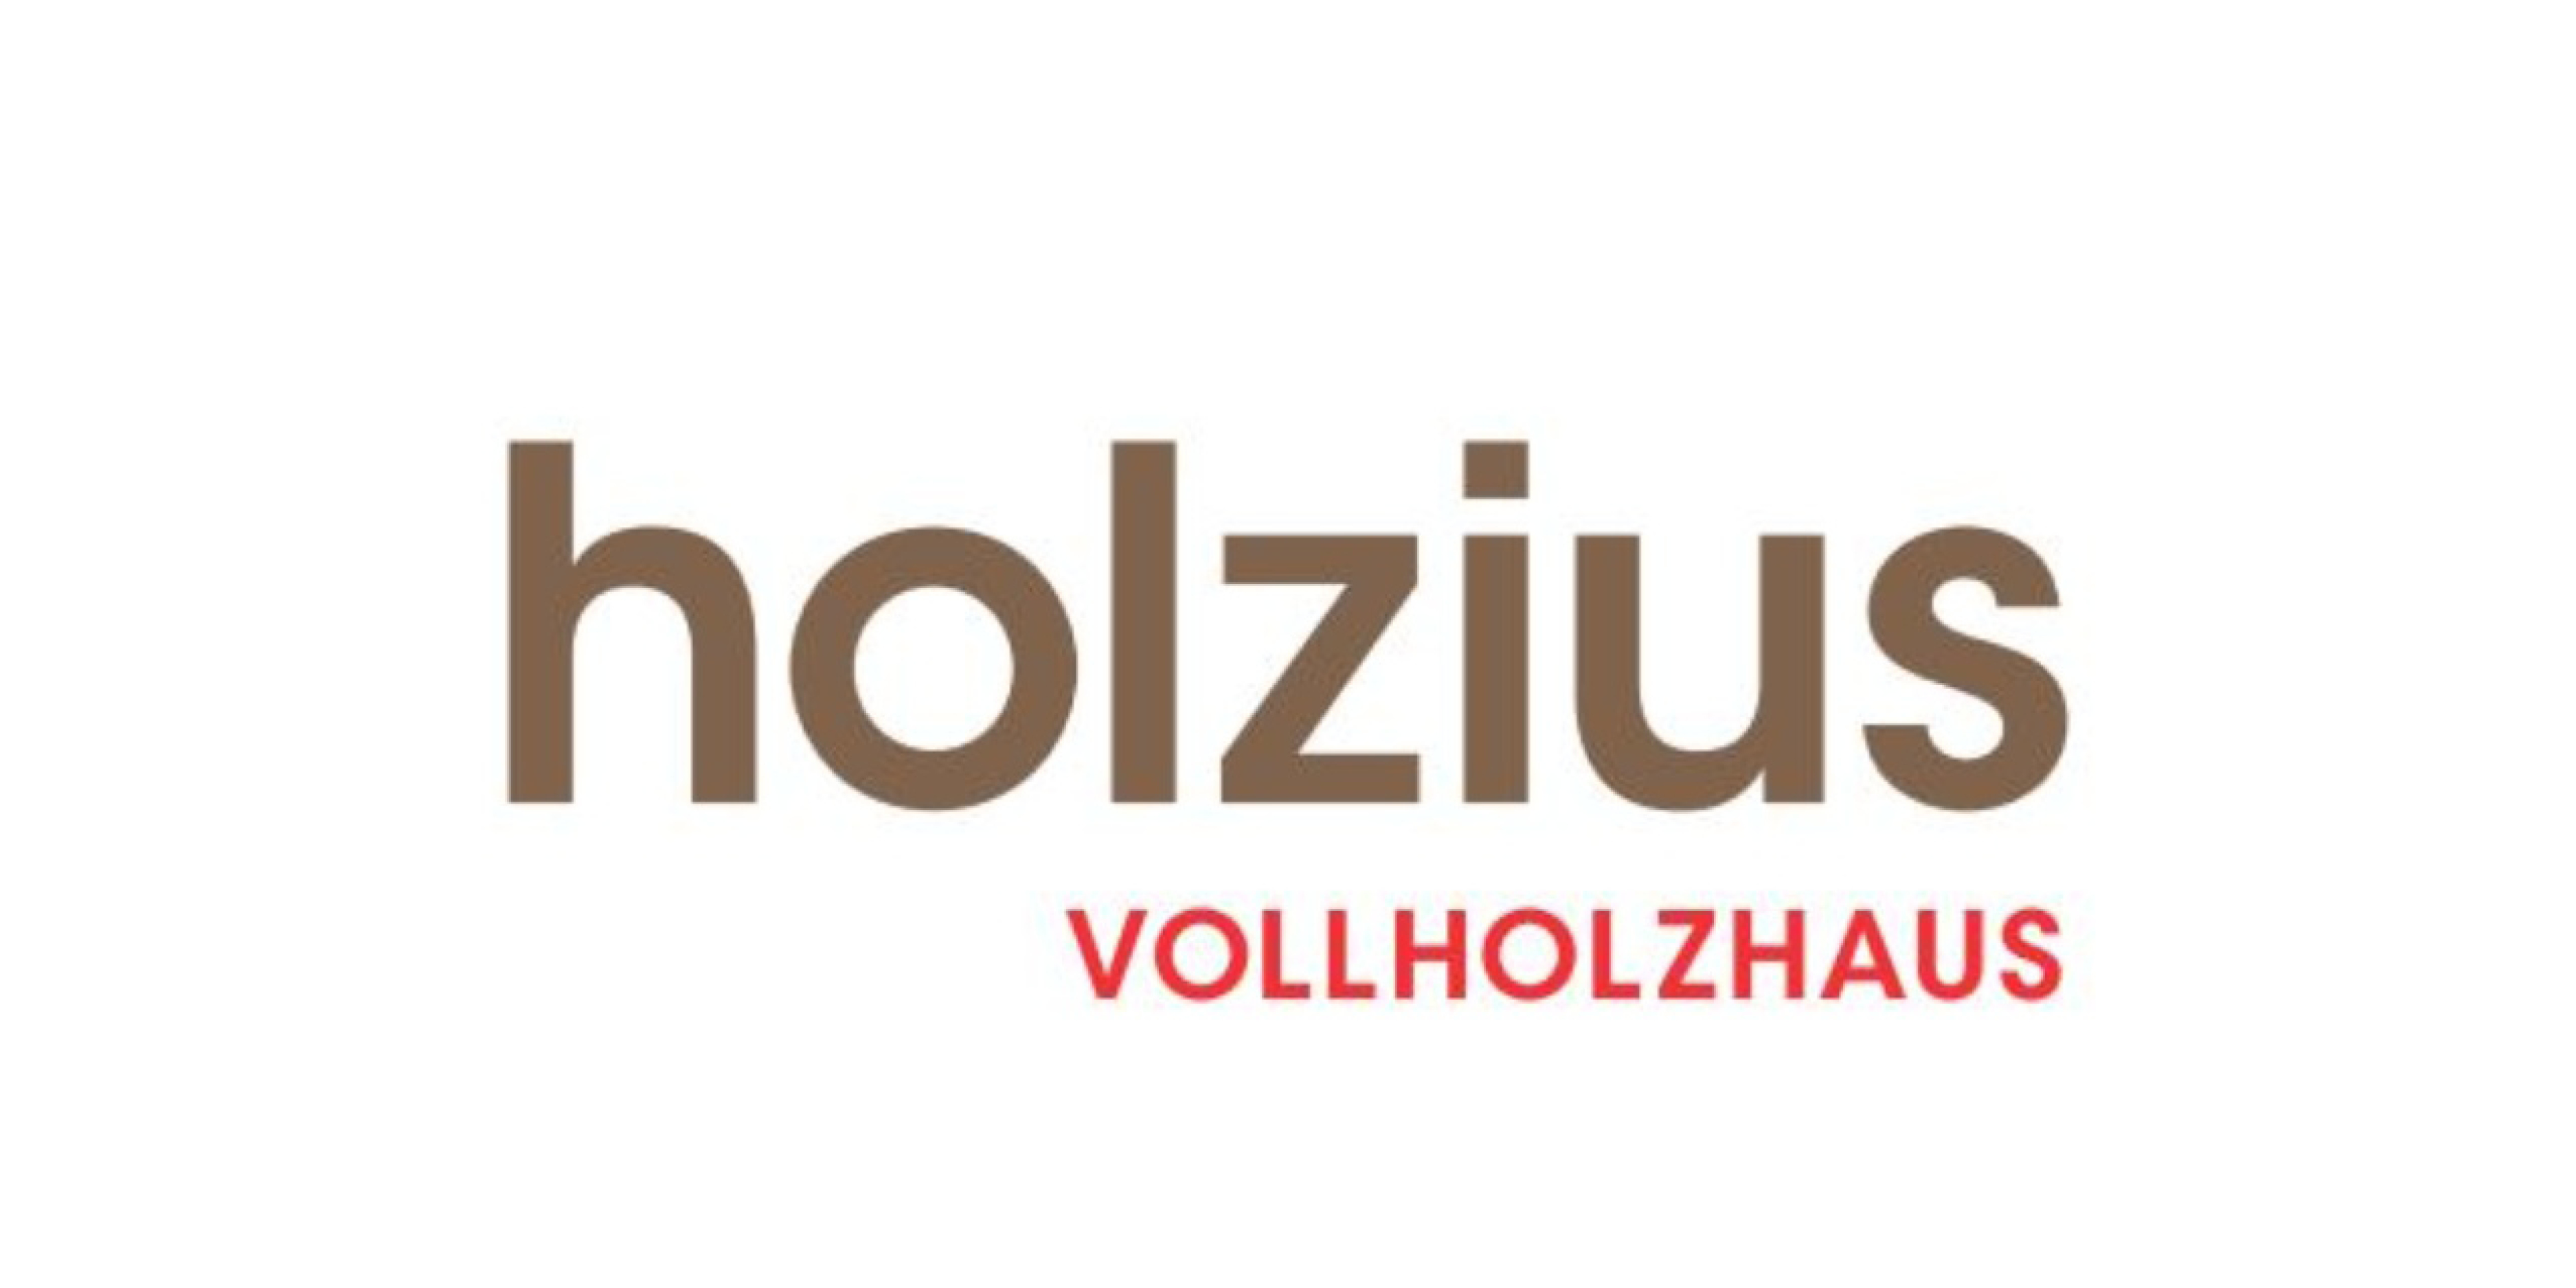 holzius GmbH